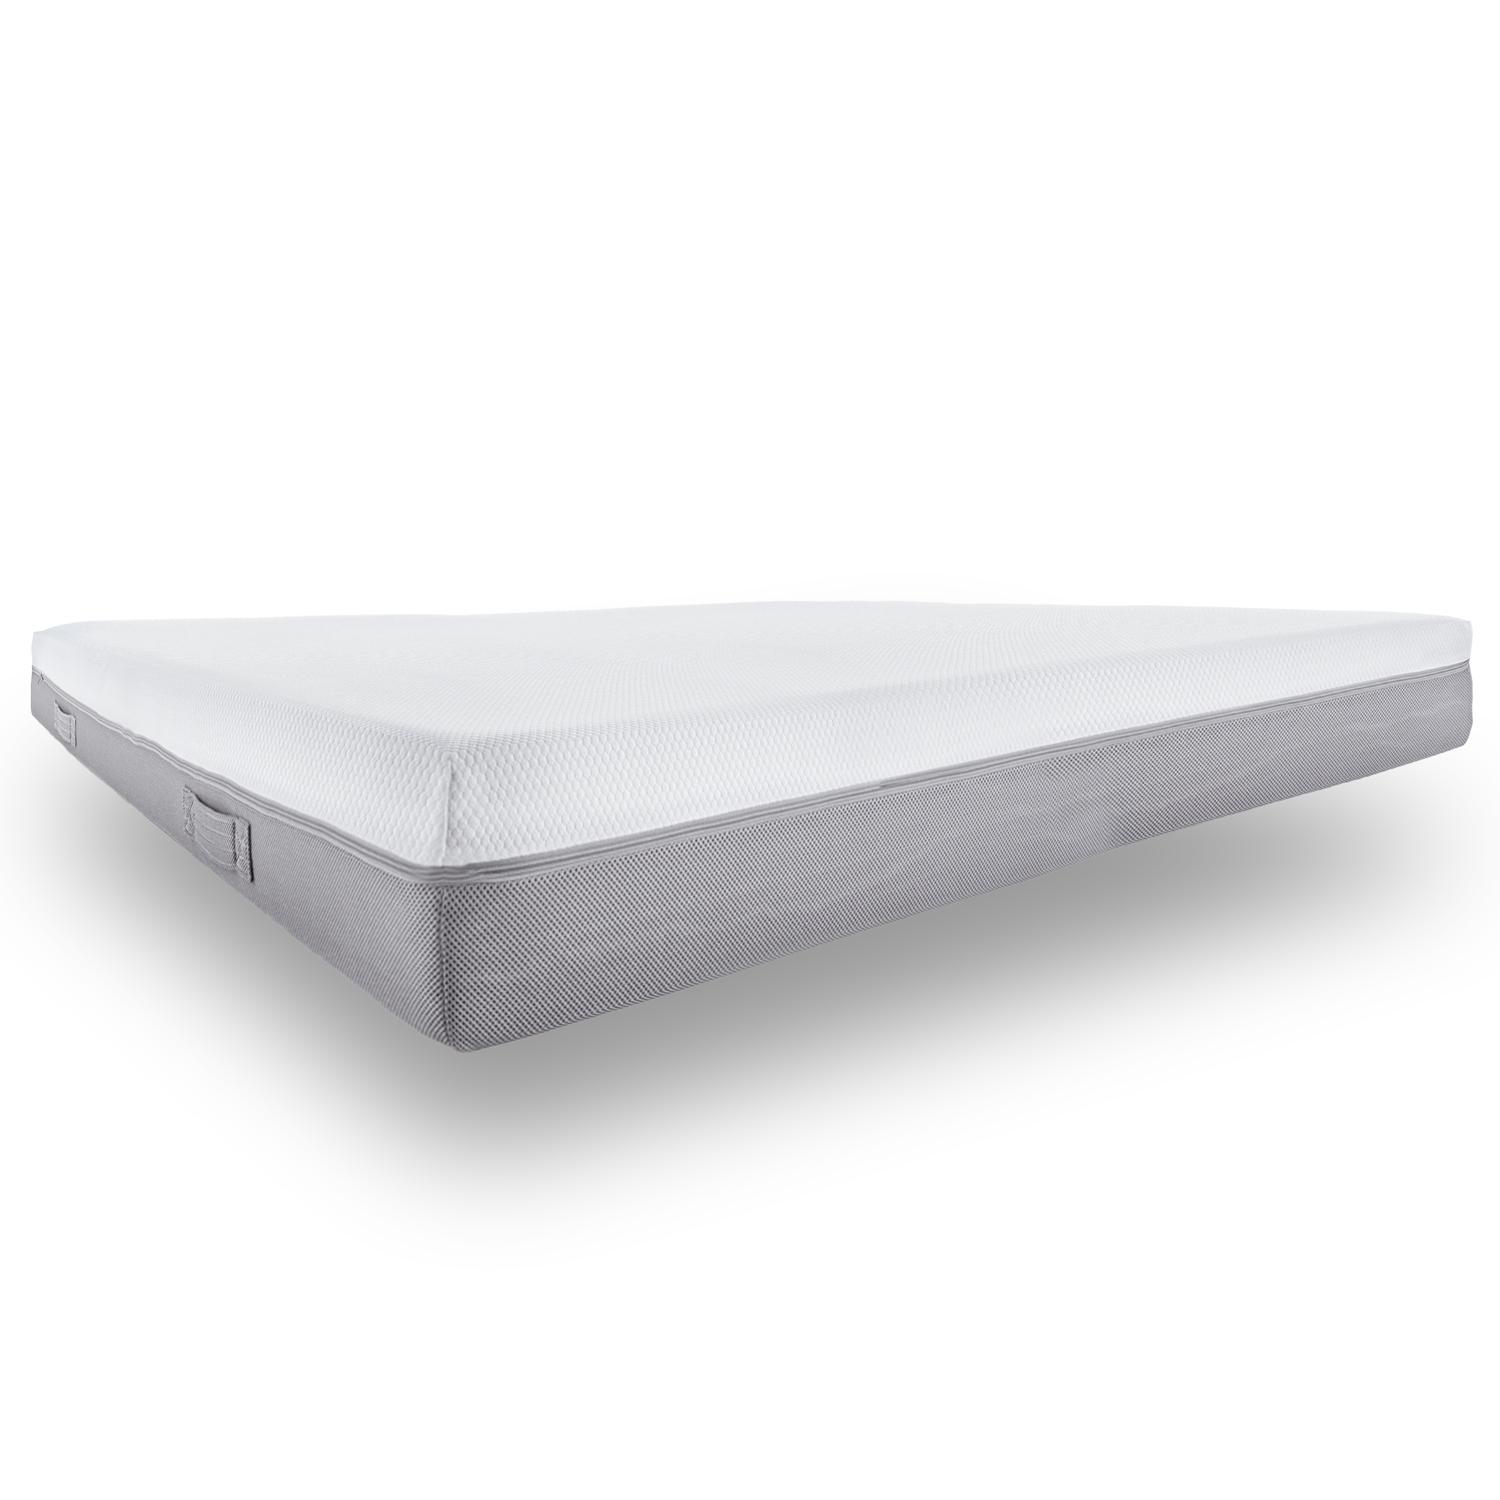 Sleezzz Premium viscoelastic mattress 180 x 200 cm, height 20 cm, firmness level H2/H3, with reversible handles